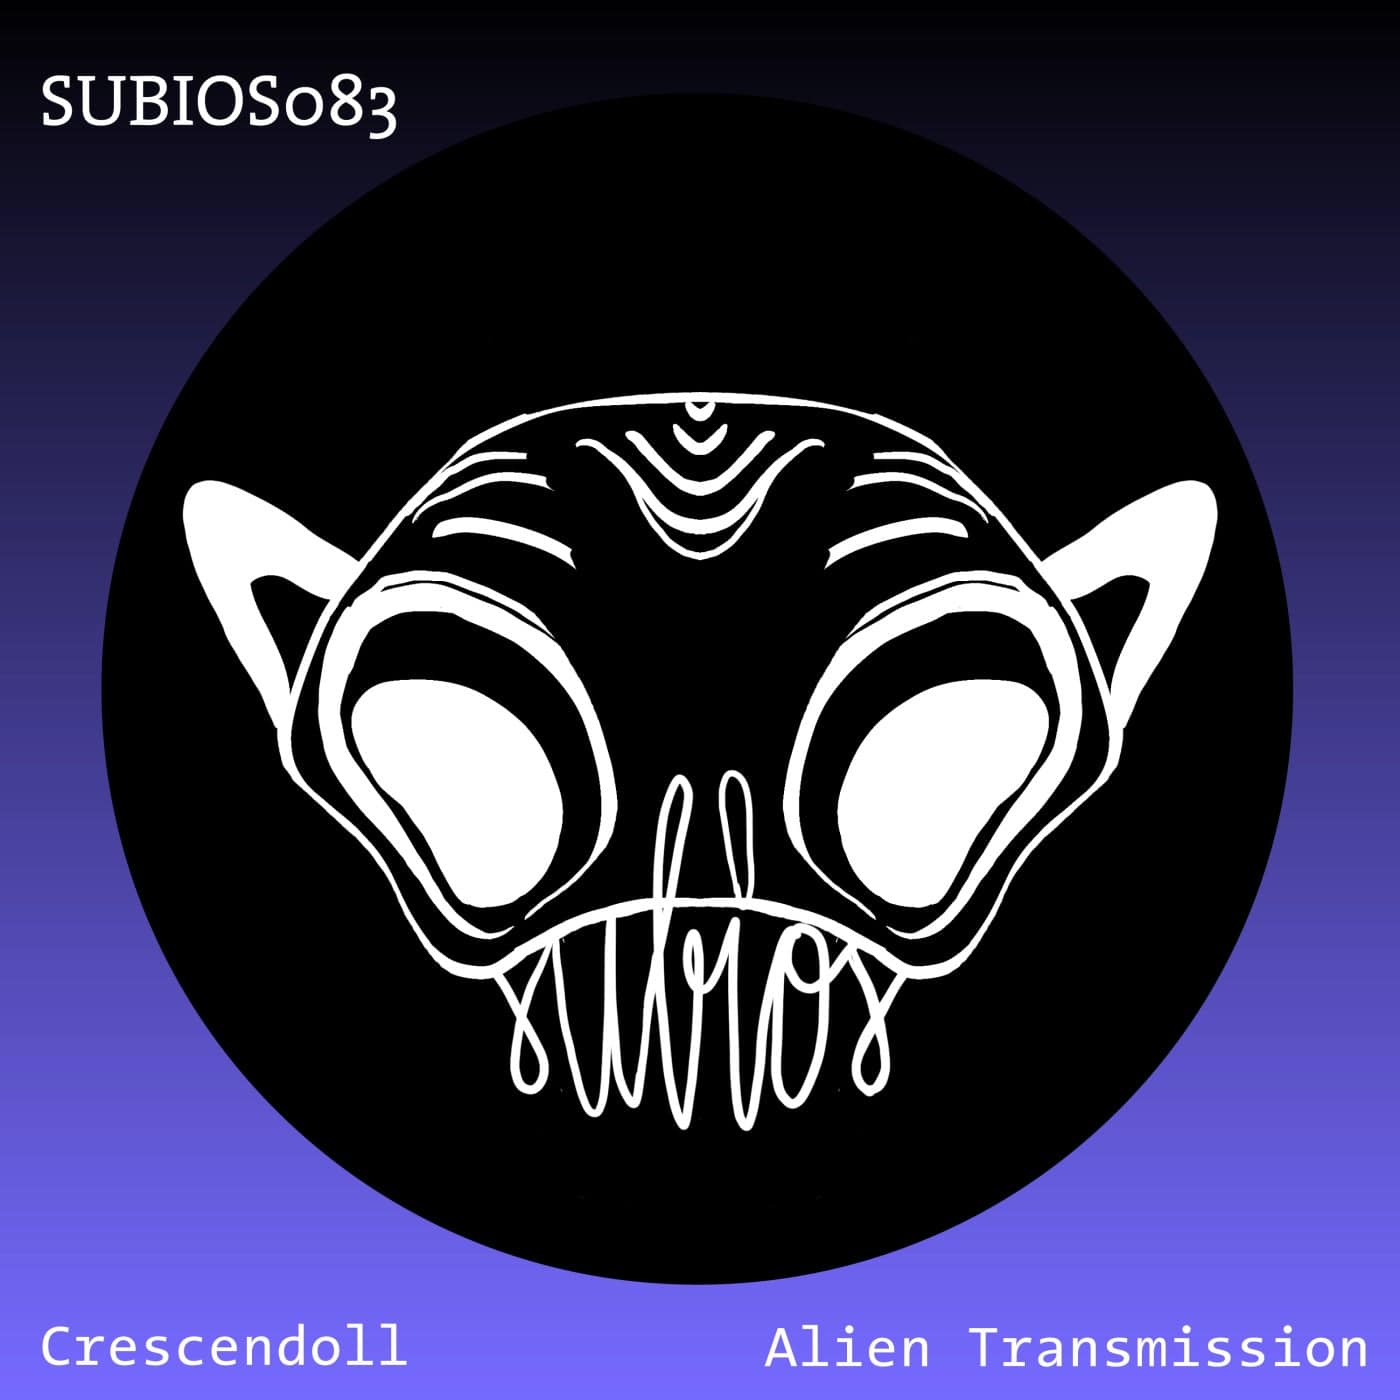 image cover: Crescendoll - Alien Transmission / SUBIOS083